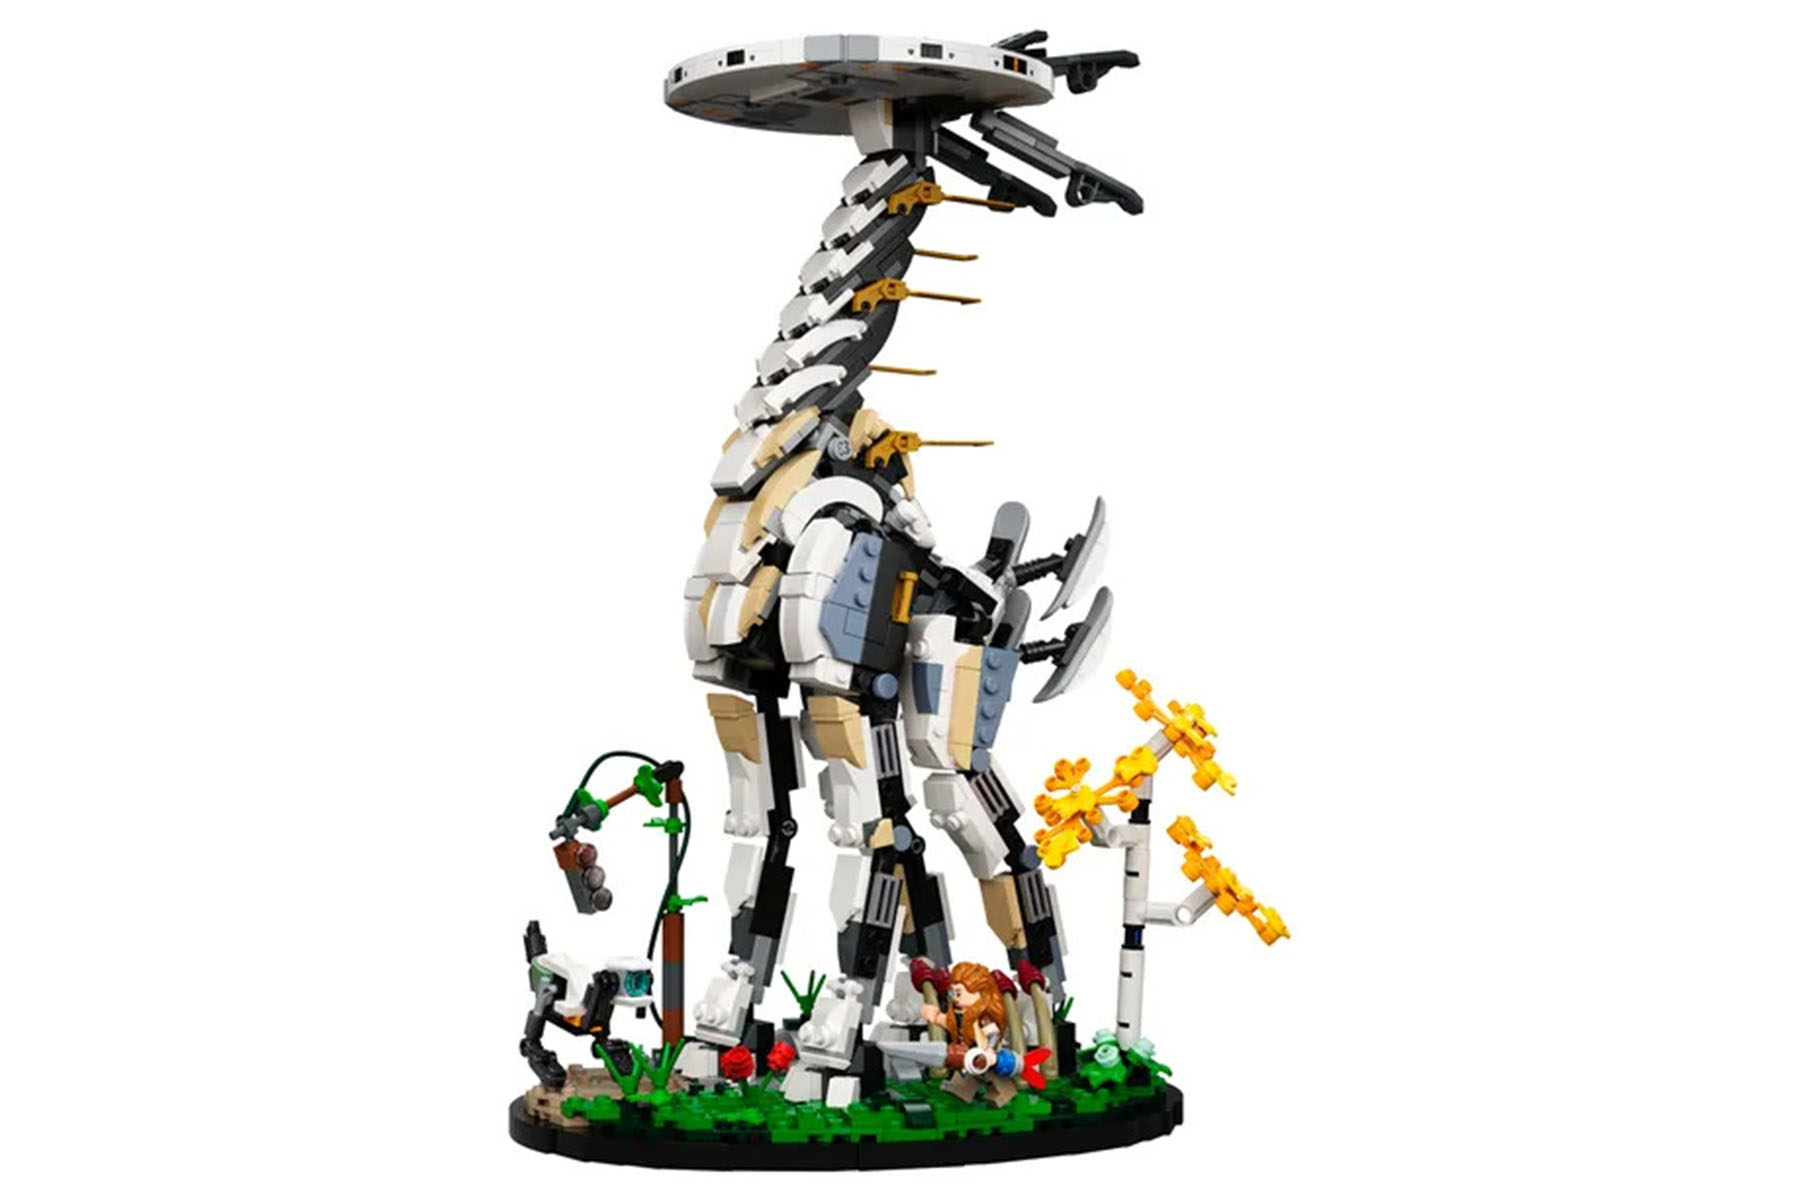 LEGO 即将推出《地平线 Horizon Forbidden West》「长颈兽 Tallneck」积木模型